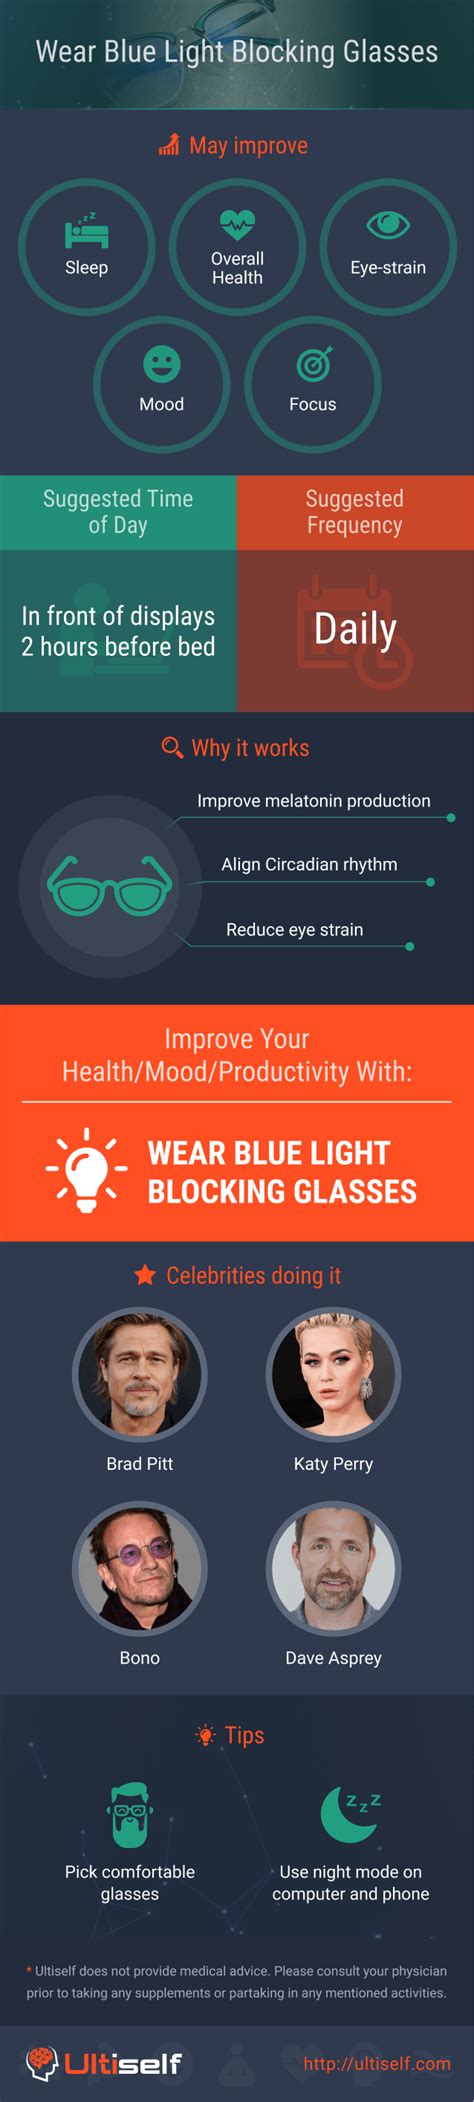 The Benefits of Wearing Blue Light Blocking Glasses | Blue light blocking glasses, Blue light ...